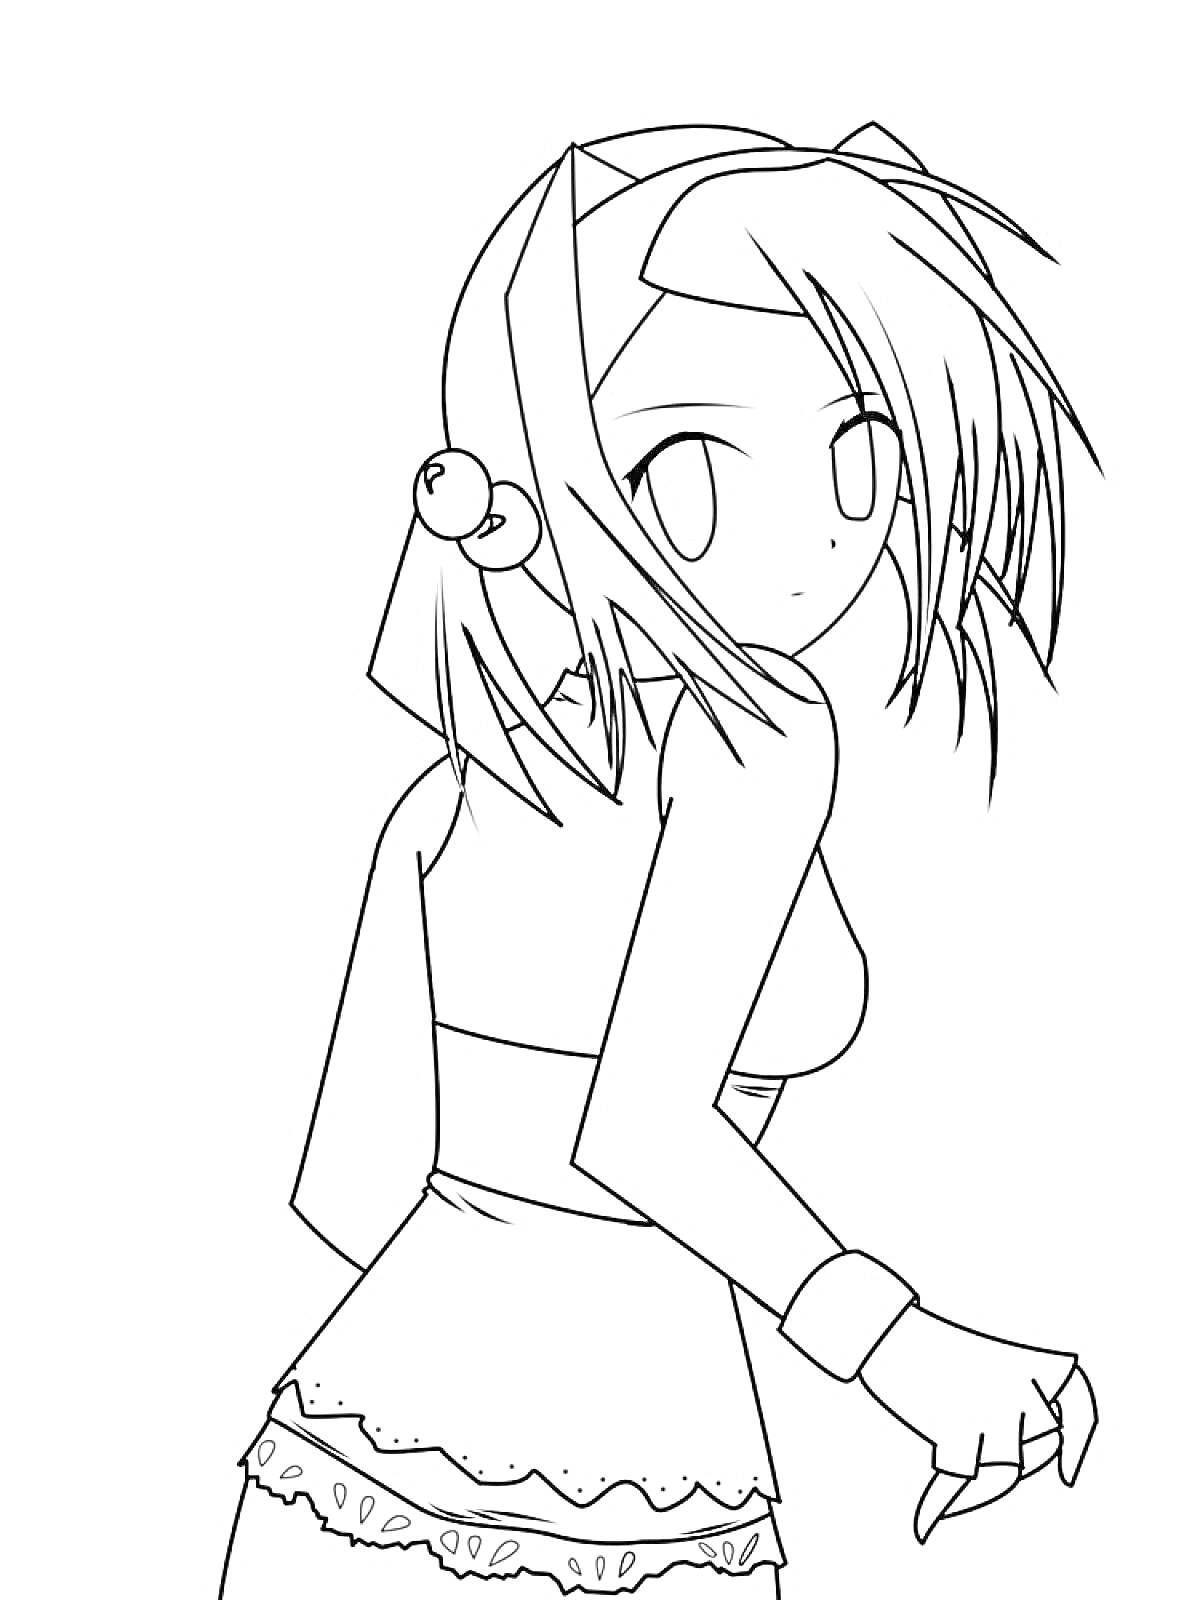 Раскраска Девушка в аниме стиле с короткими волосами, резинкой на голове и в блузке с юбкой с кружевами.